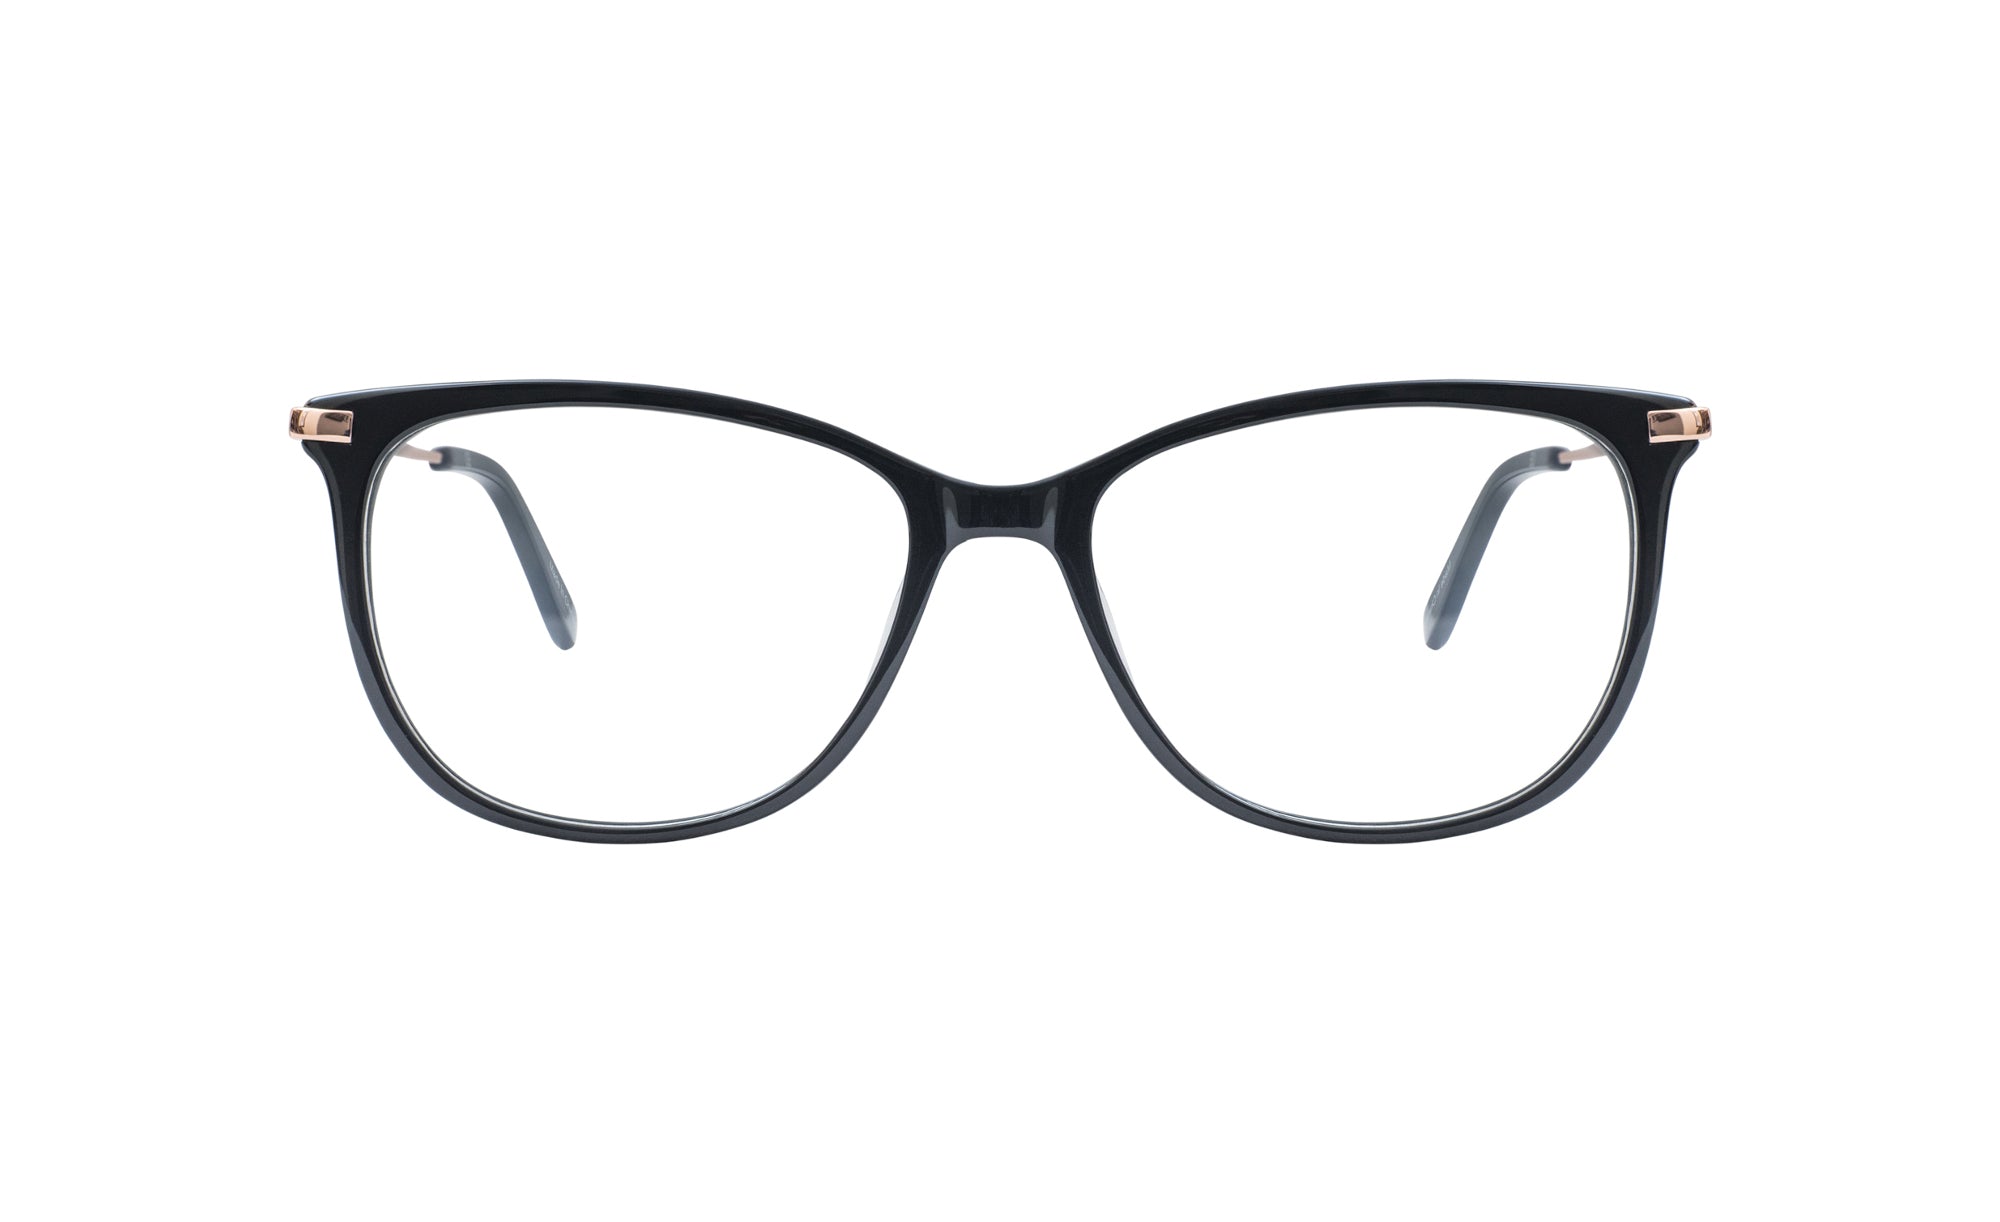 ANN TAYLOR AT-339 - Women's Eyeglasses – New Look